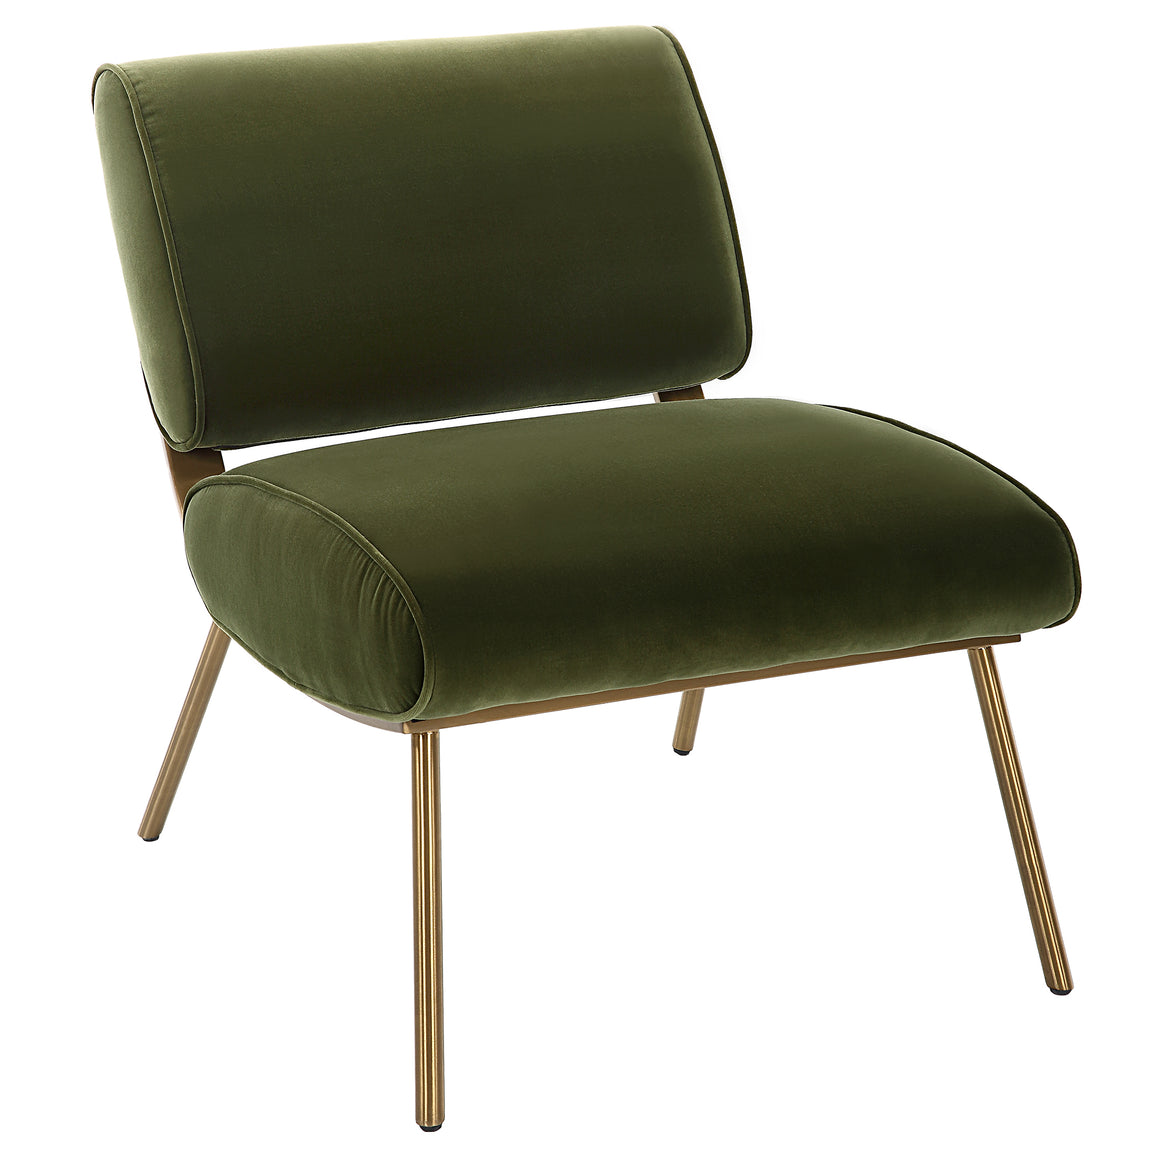 Knoll Armless Accent Chair @taylorraydesign